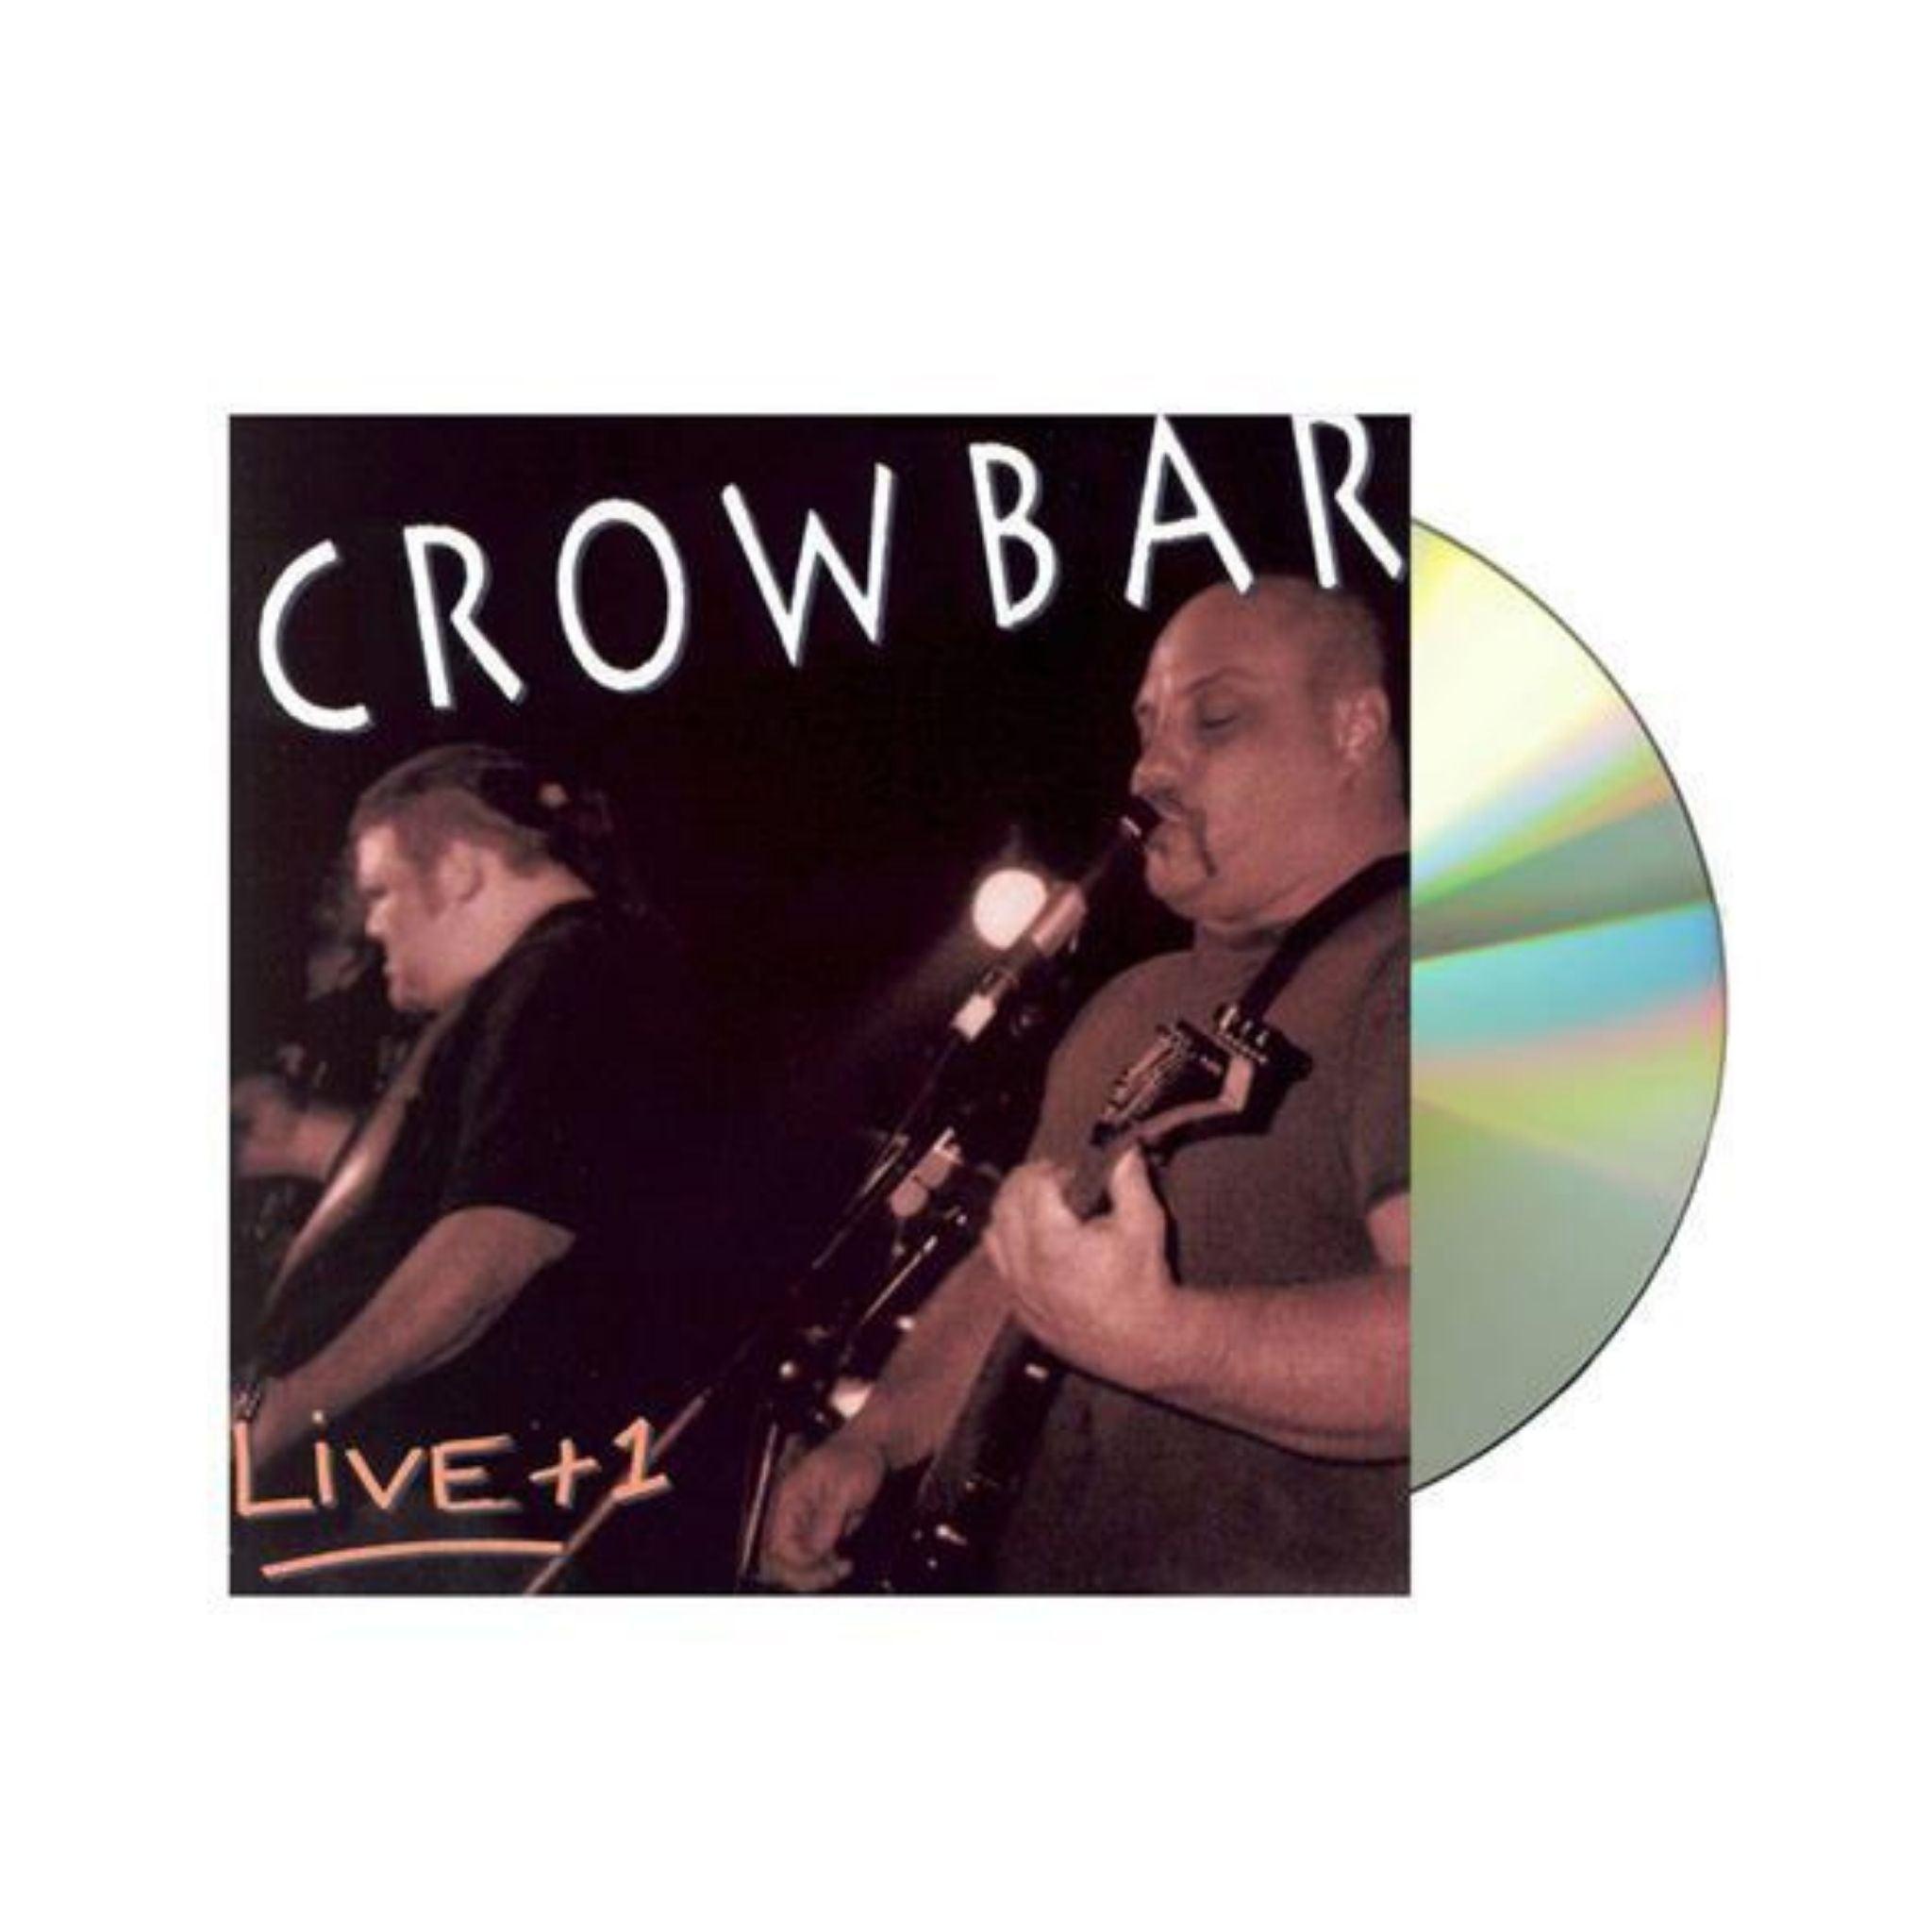 Crowbar - "Live +1" CD - MNRK Heavy